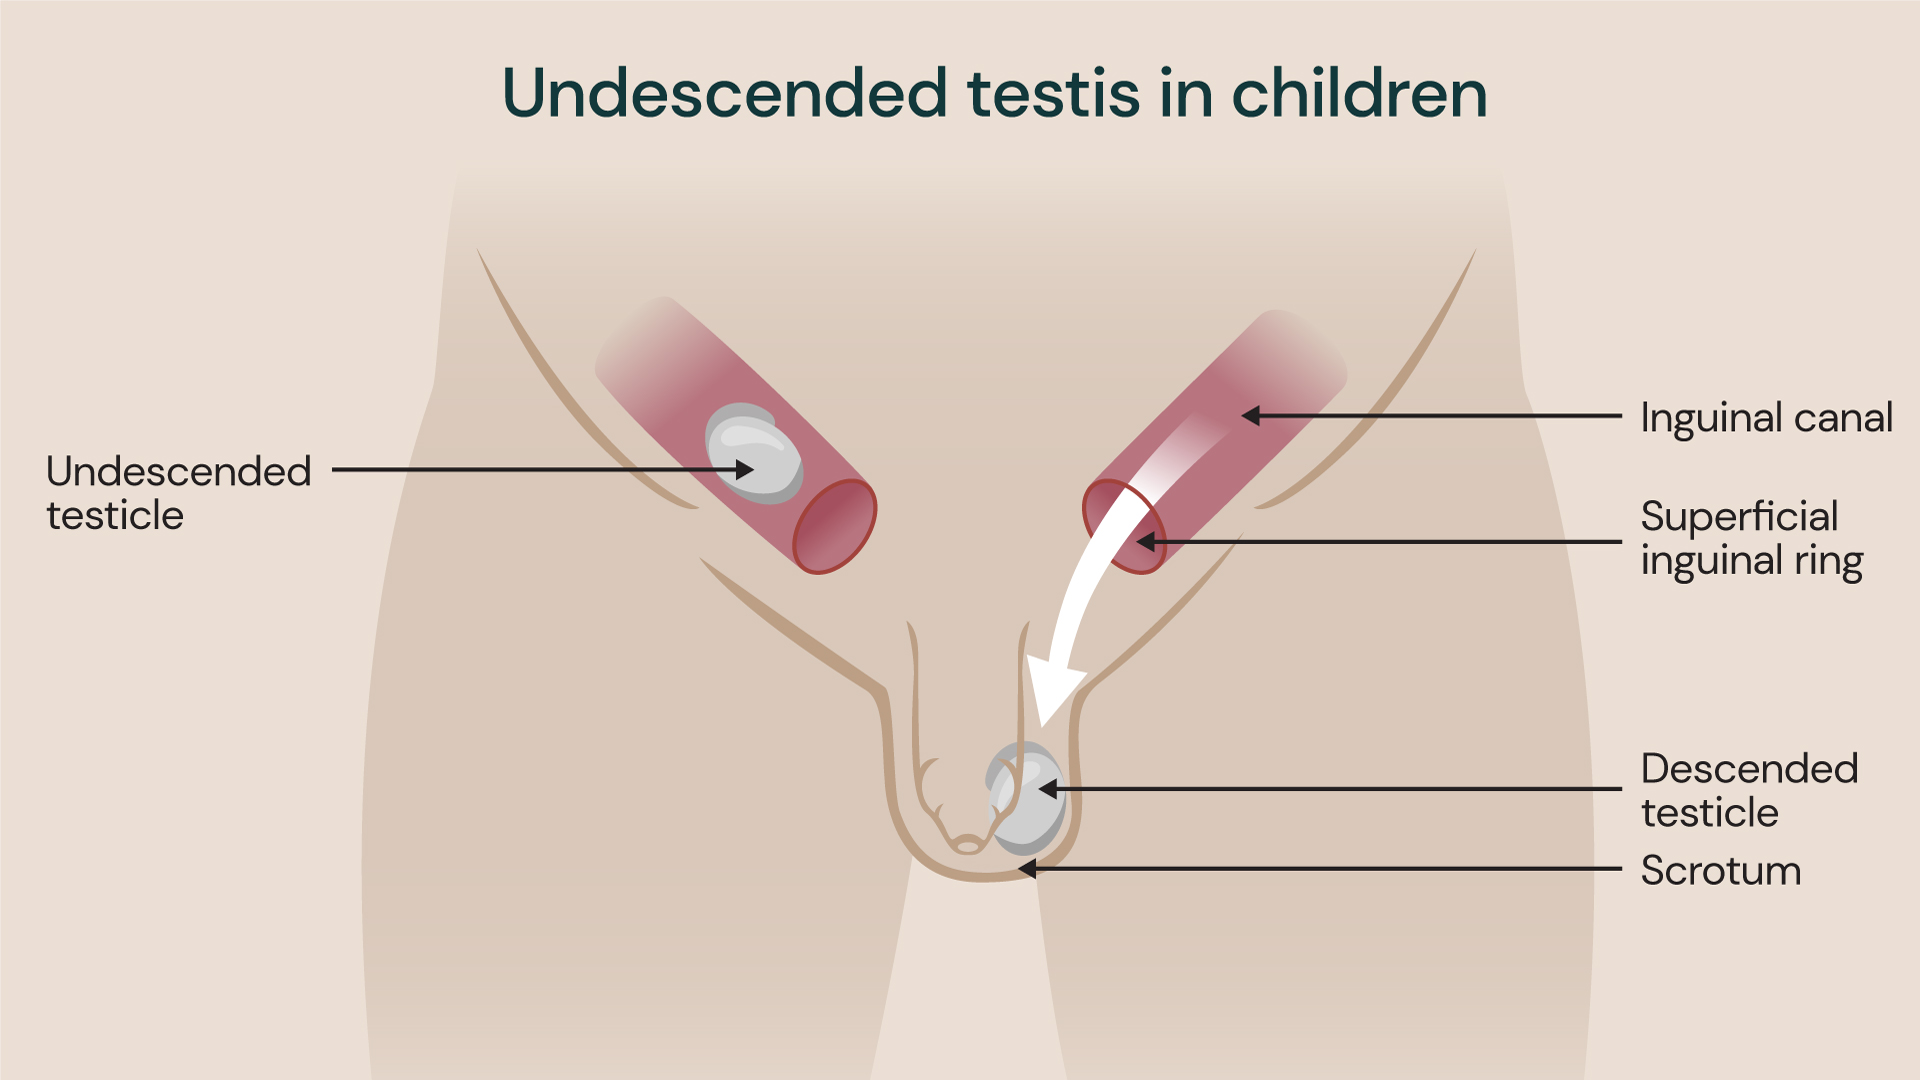 Undescended testis in children